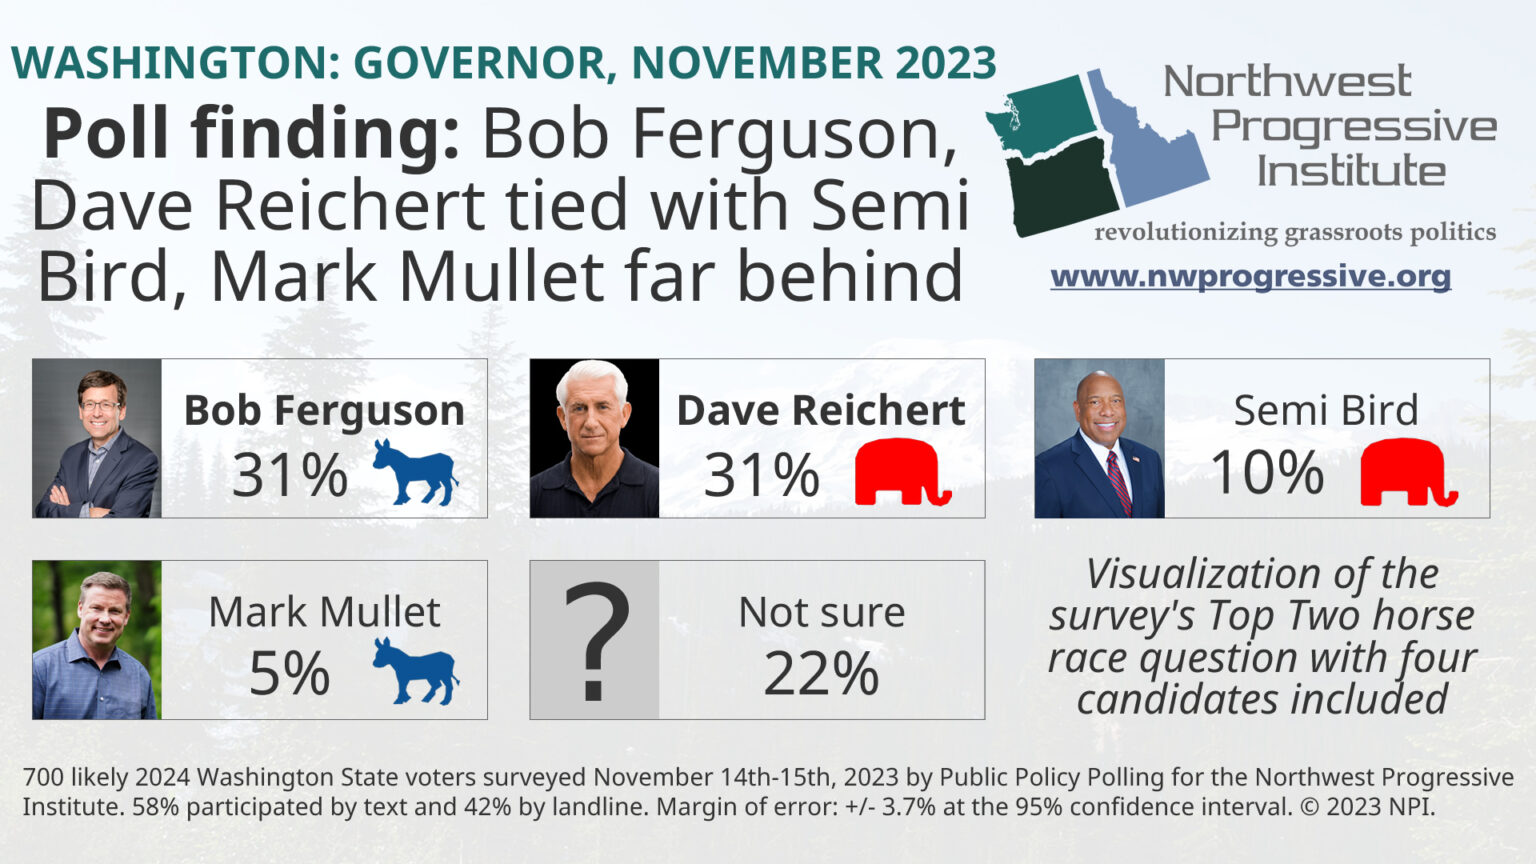 Dave Reichert slightly ahead of Bob Ferguson in 2024 WA gubernatorial